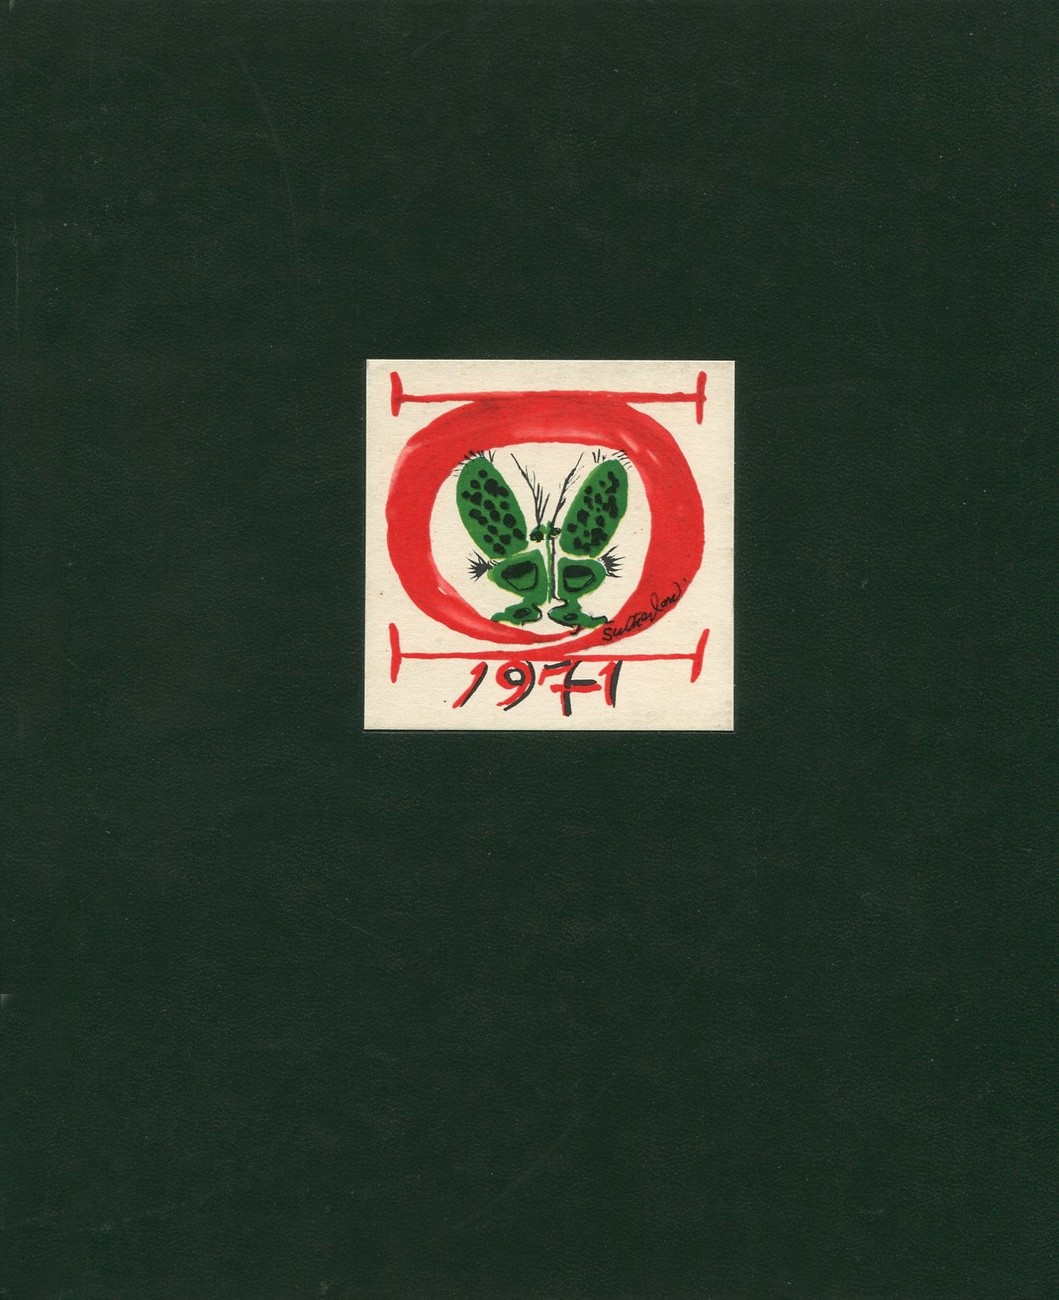 Sutherland, Carrieri, Soavi – Olivetti monograph